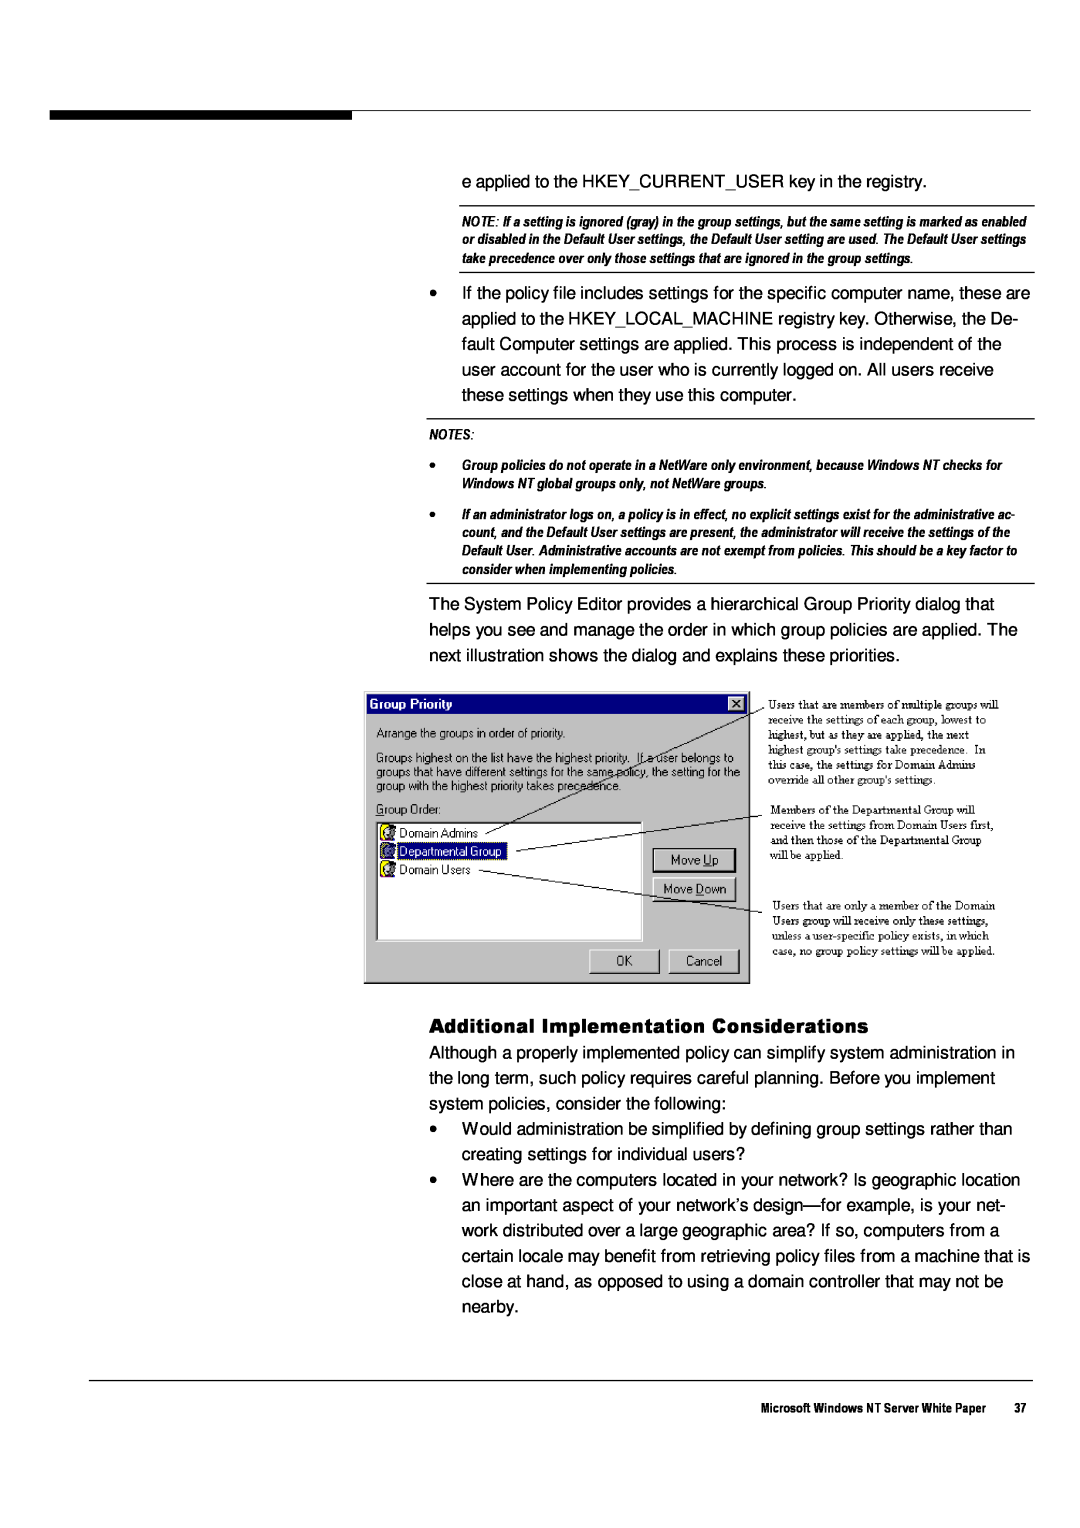 Microsoft Windows NT 4.0 manual Additional Implementation Considerations 